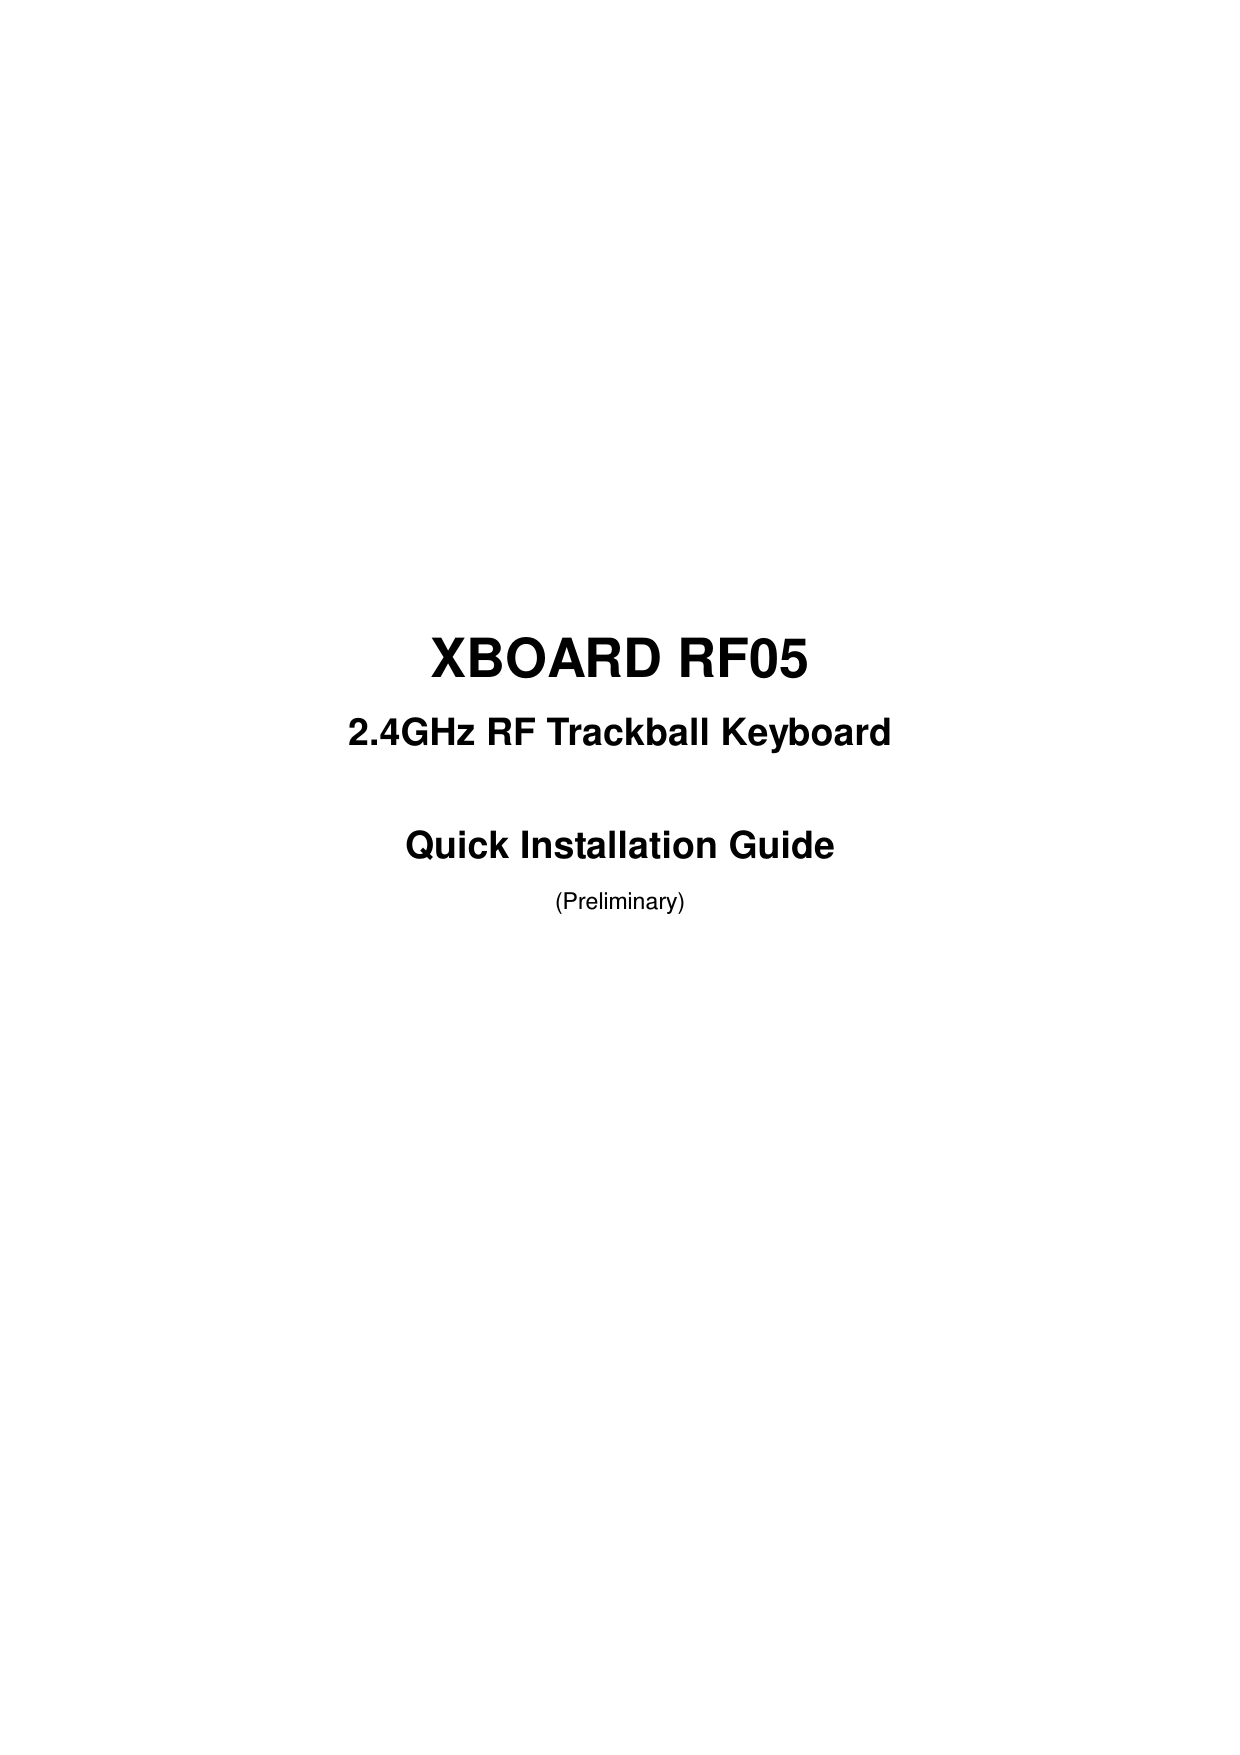        XBOARD RF05 2.4GHz RF Trackball Keyboard  Quick Installation Guide (Preliminary)       